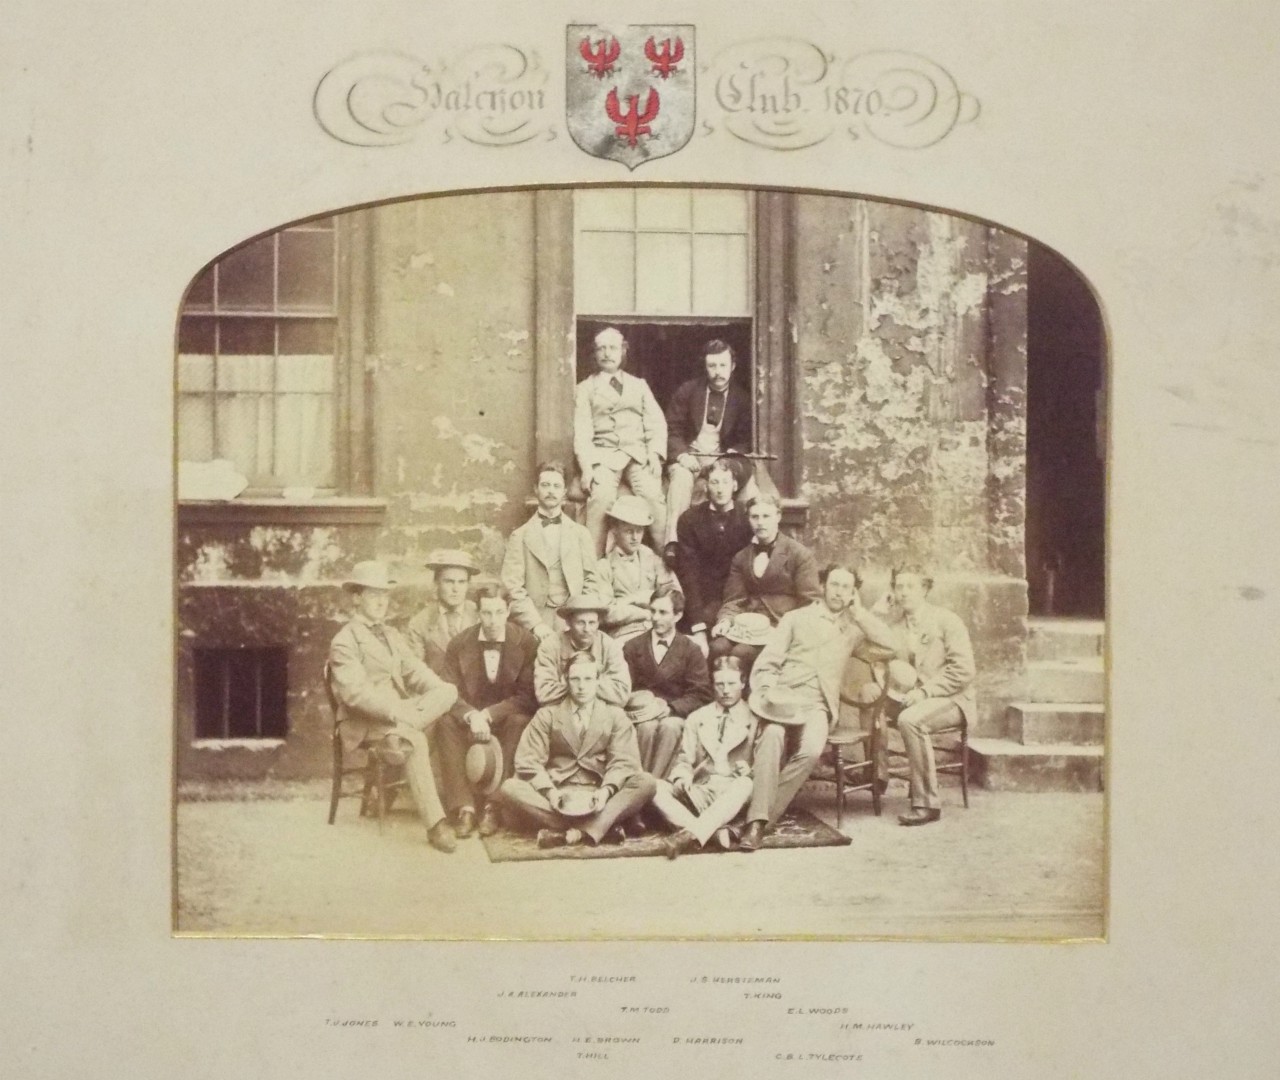 Photograph - Halcyon Club 1870